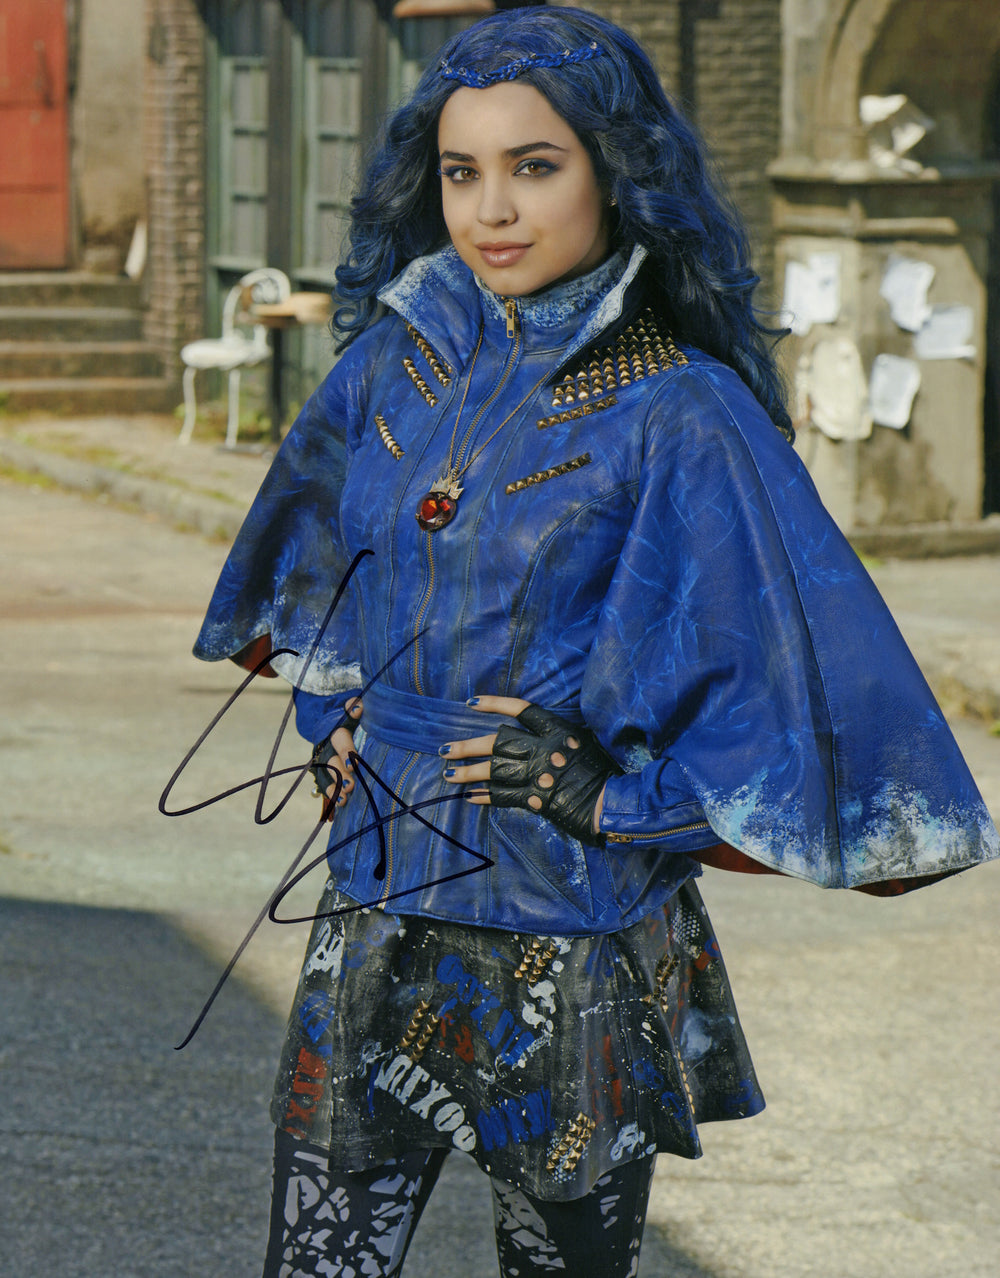 Sofia Carson as Evie, daughter of Evil Queen in Disney's Descendants Signed 11x14 Photo